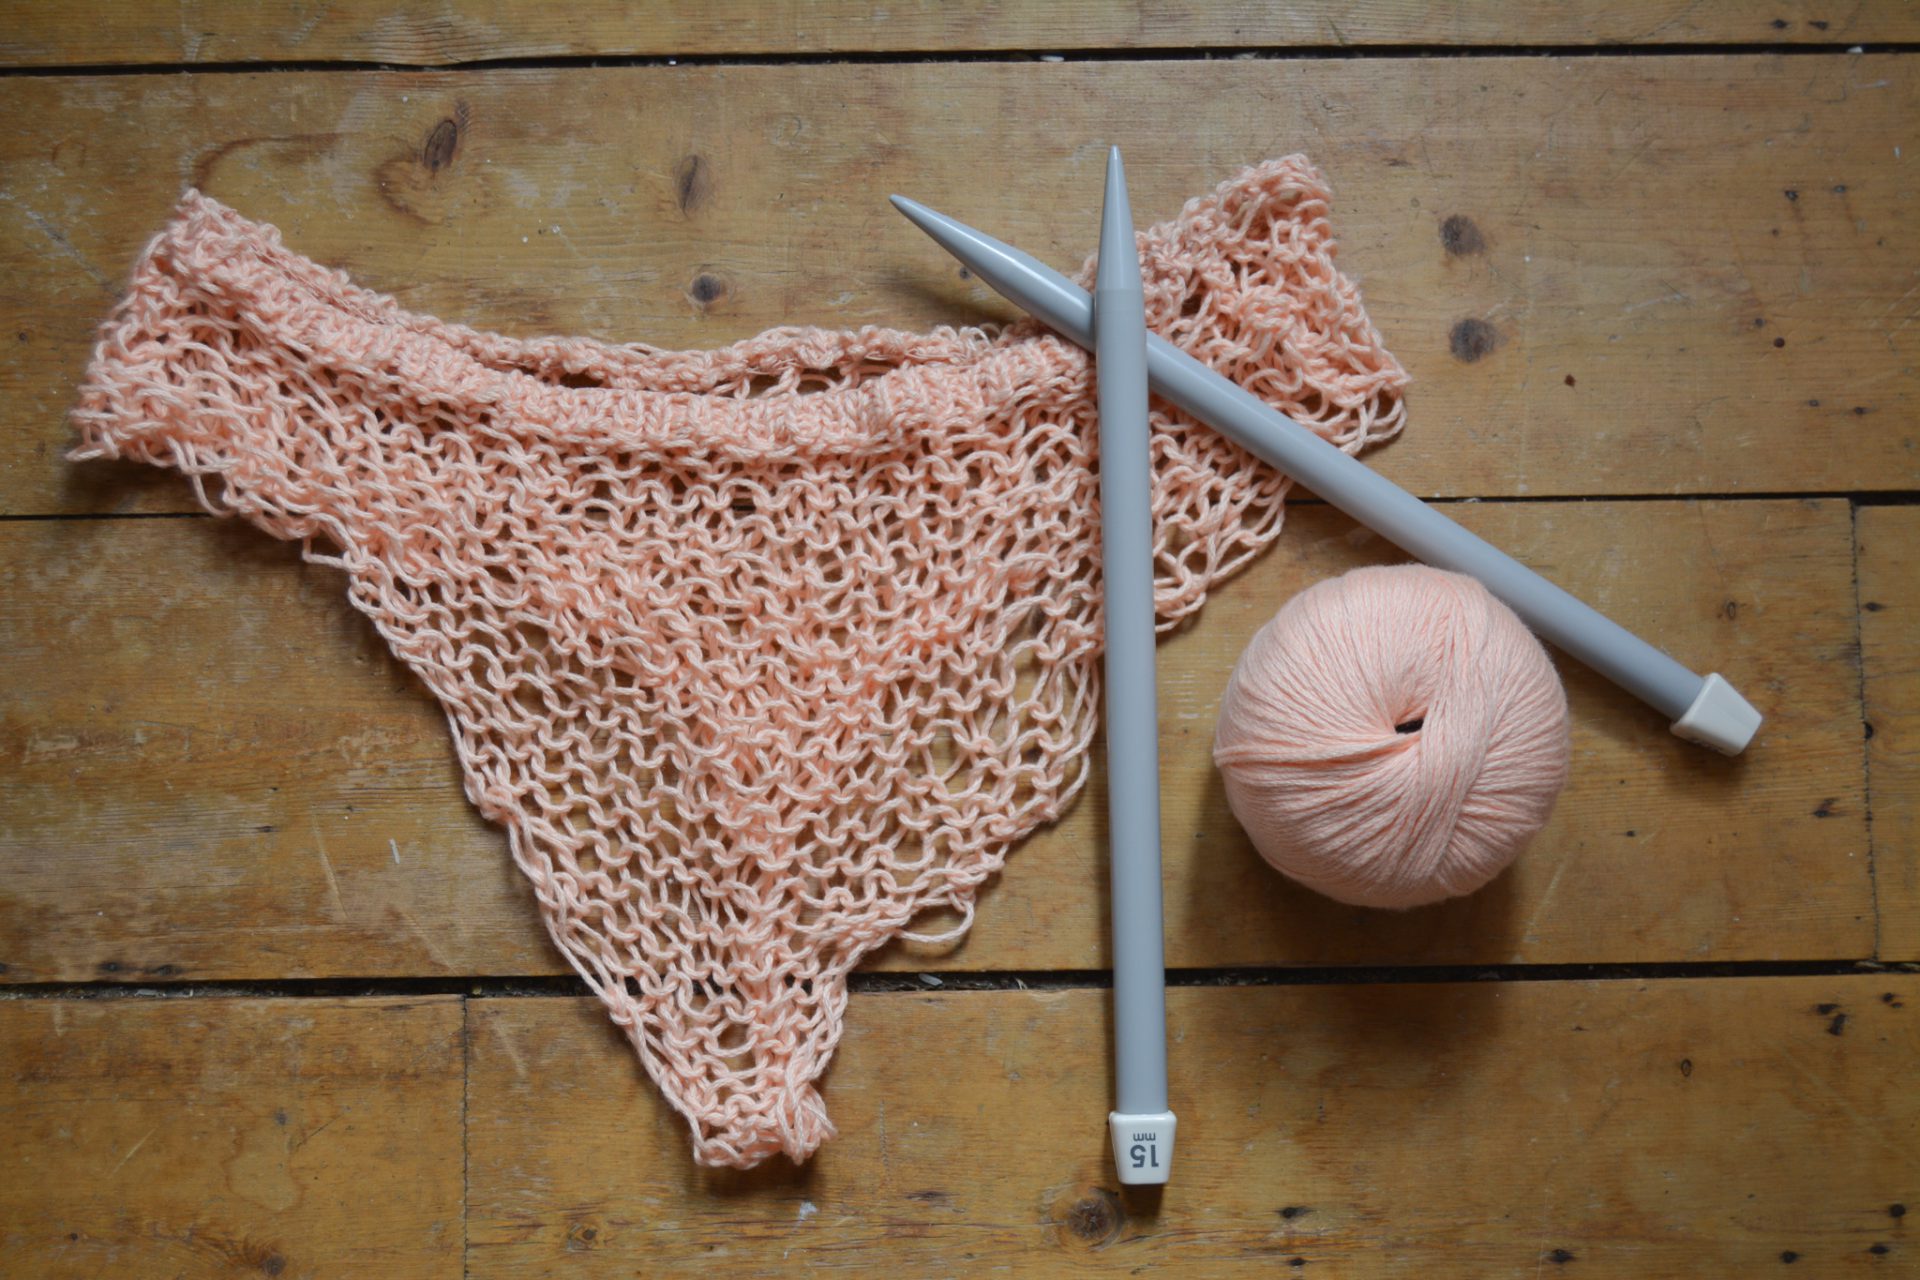 Knitted shorts by Tejiendo la isla: a refreshing pattern to knit in summer